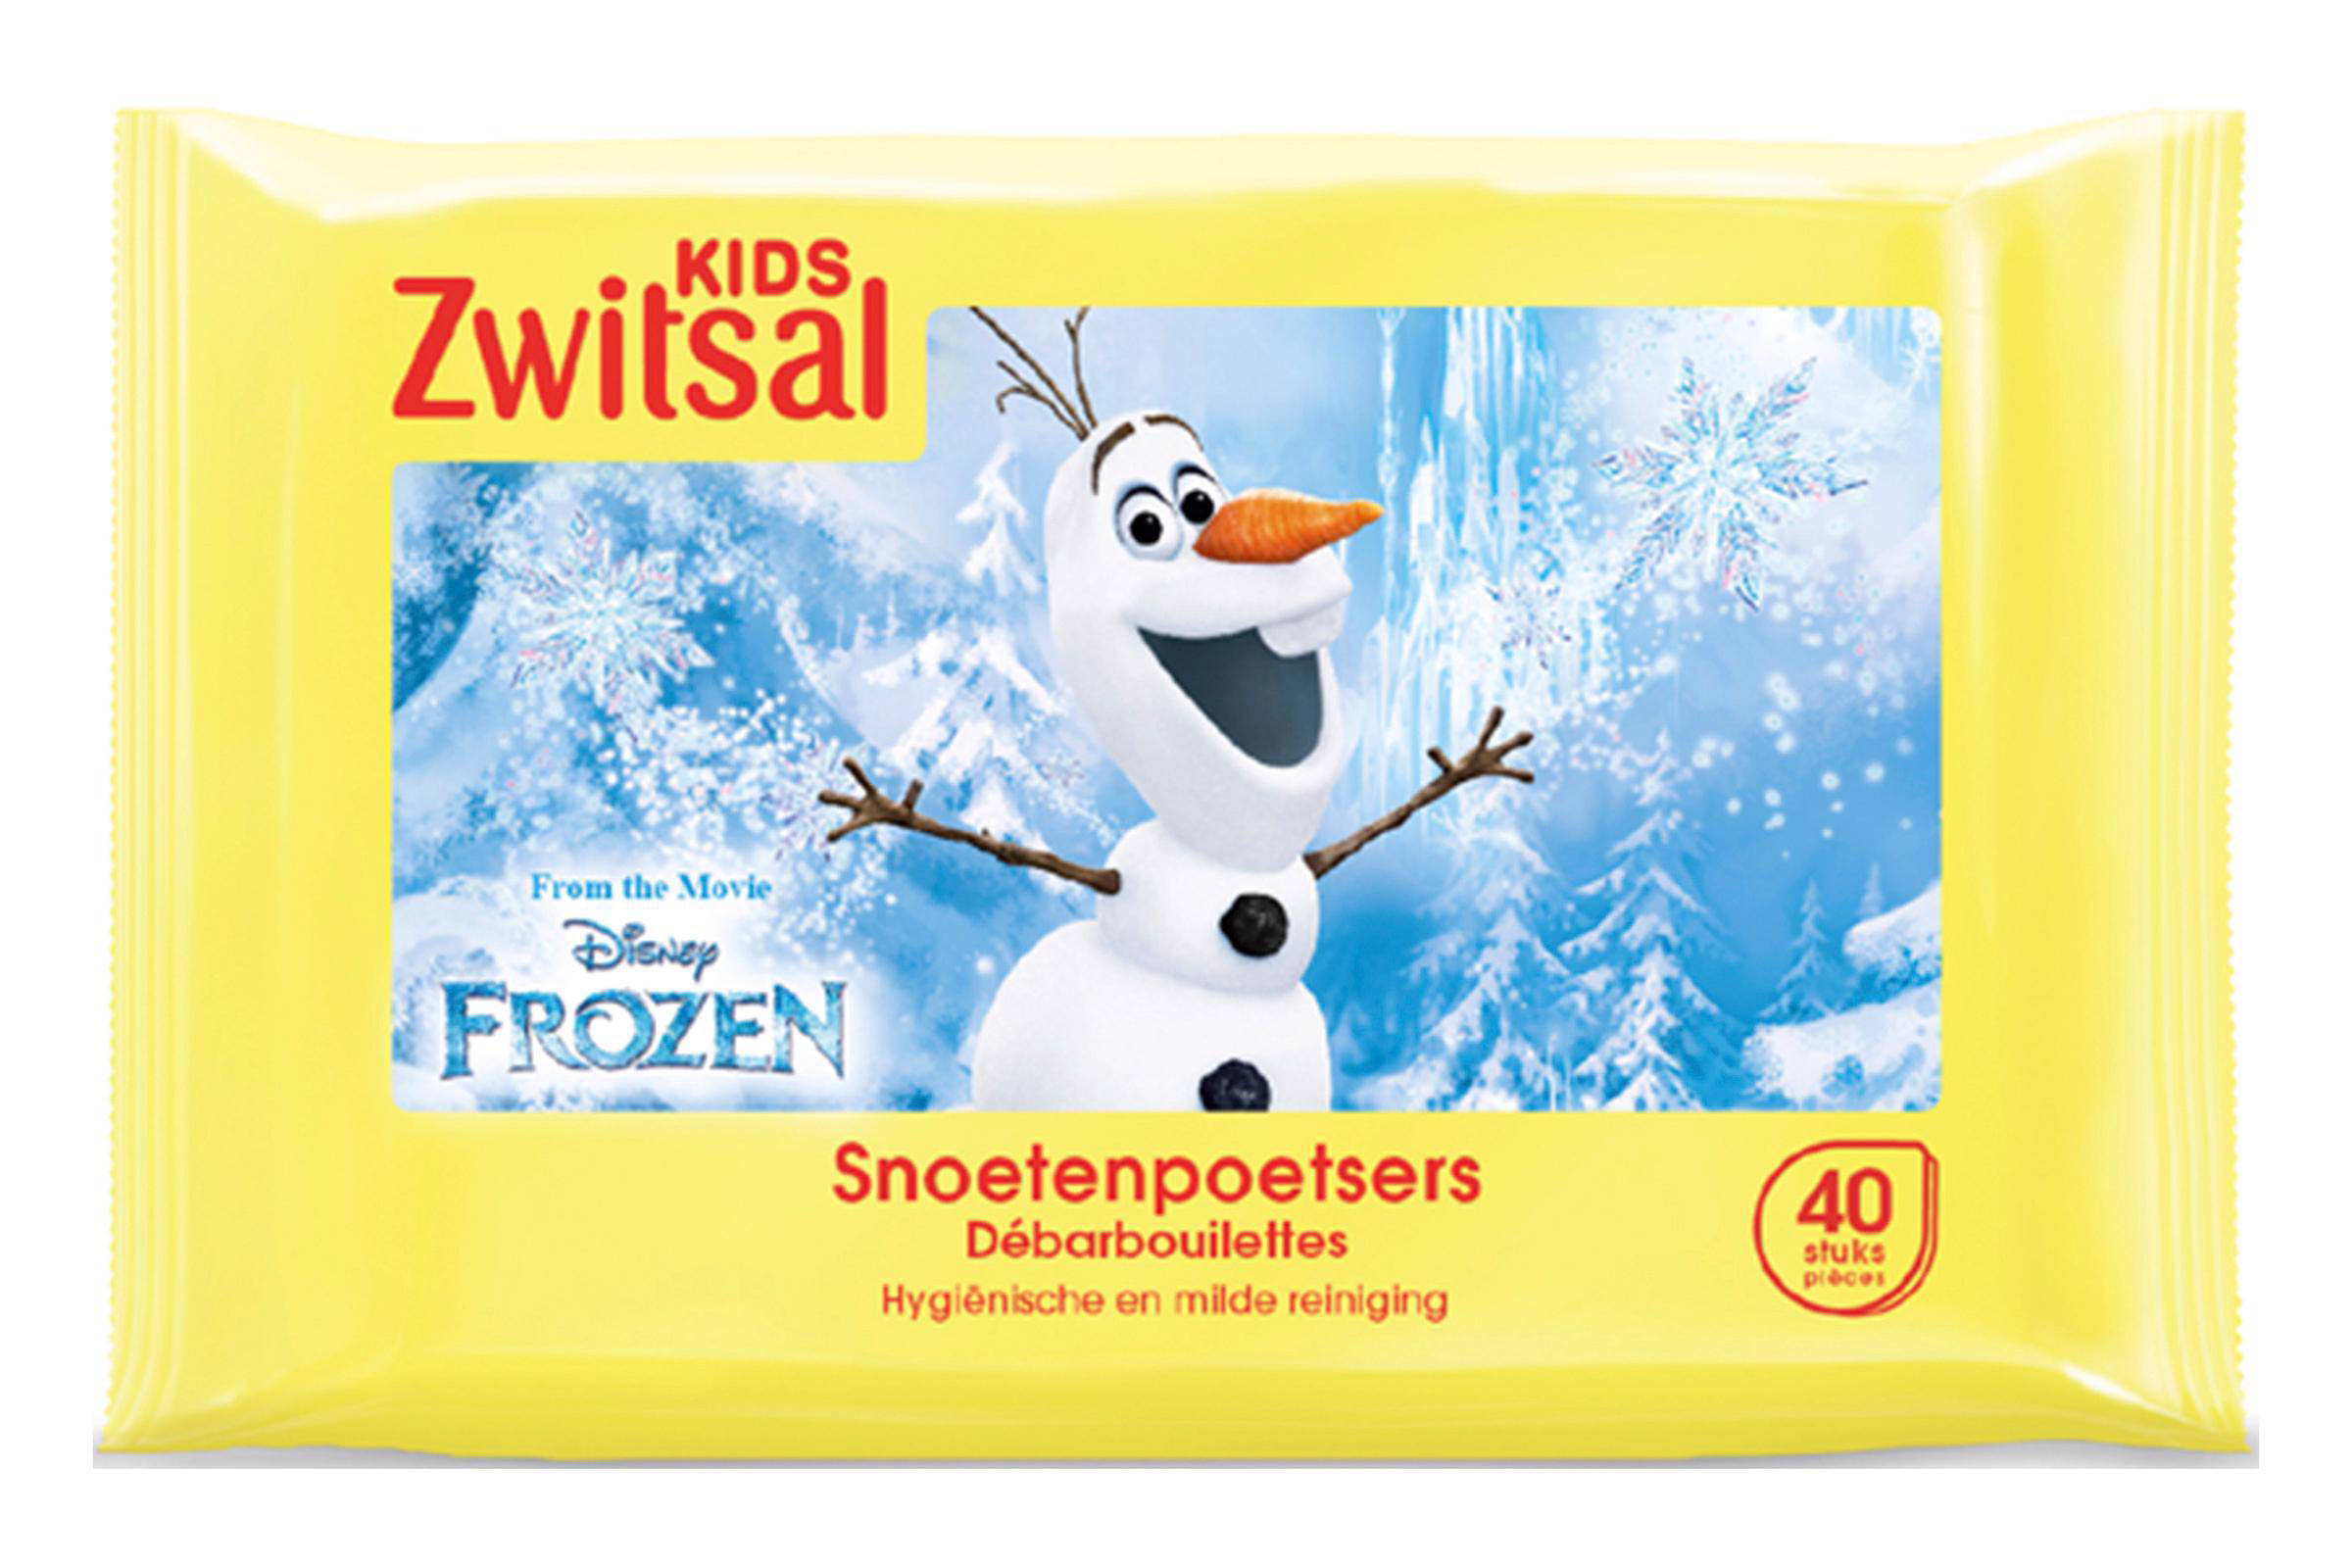 Zwitsal Disney Frozen Olaf Snoetenpoetsers 40 Doekjes(1x40 Stuks ) online kopen